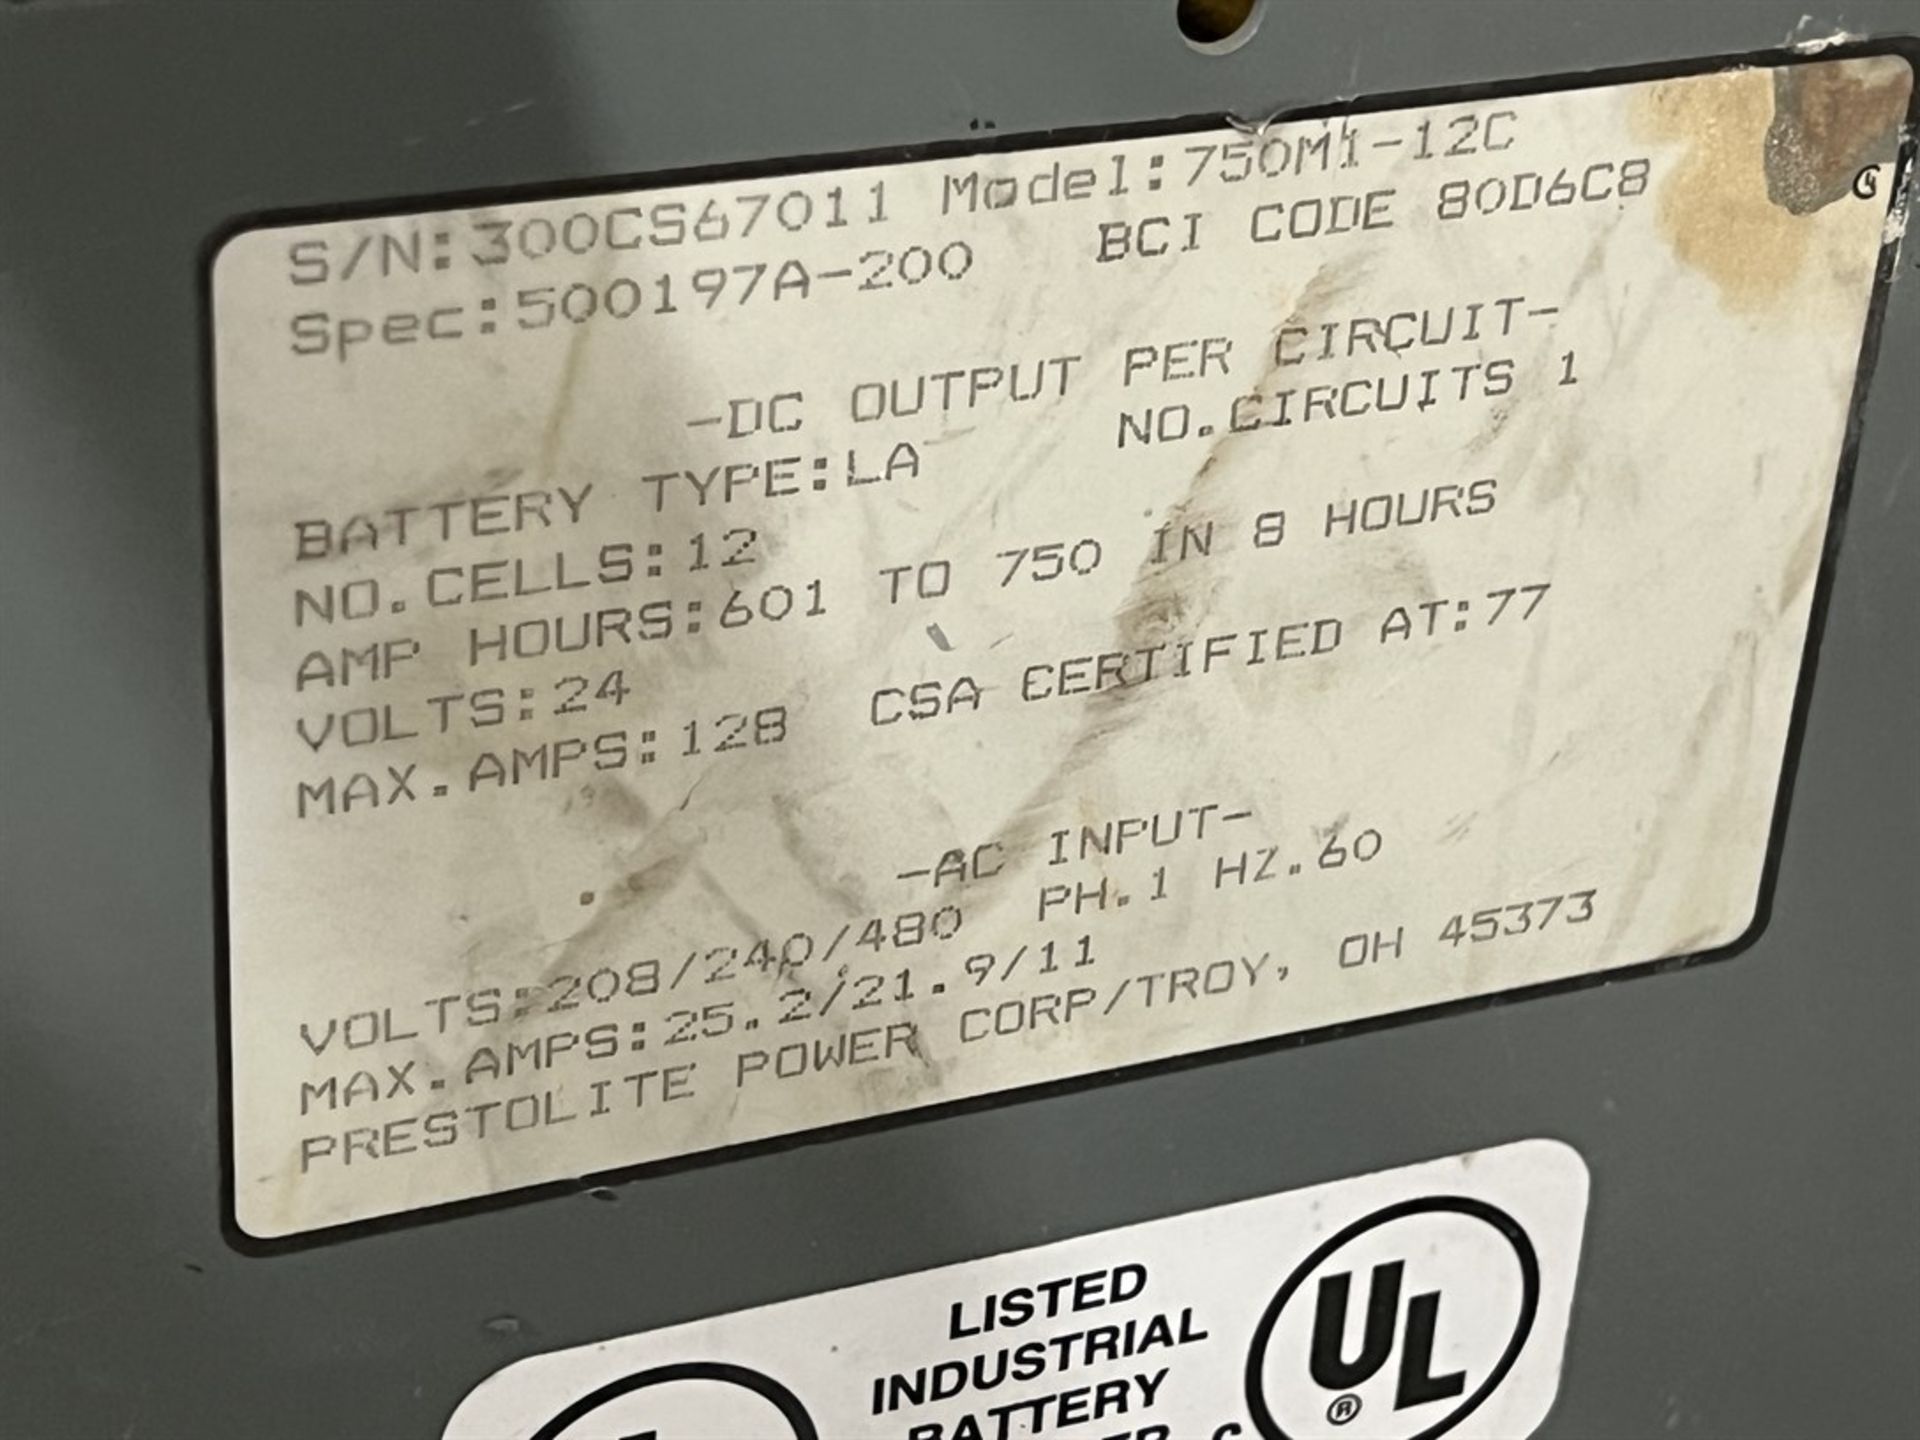 HOBART Battery Mate 750M1-12C 24V Battery Charger, s/n 300CS67011 - Image 3 of 3